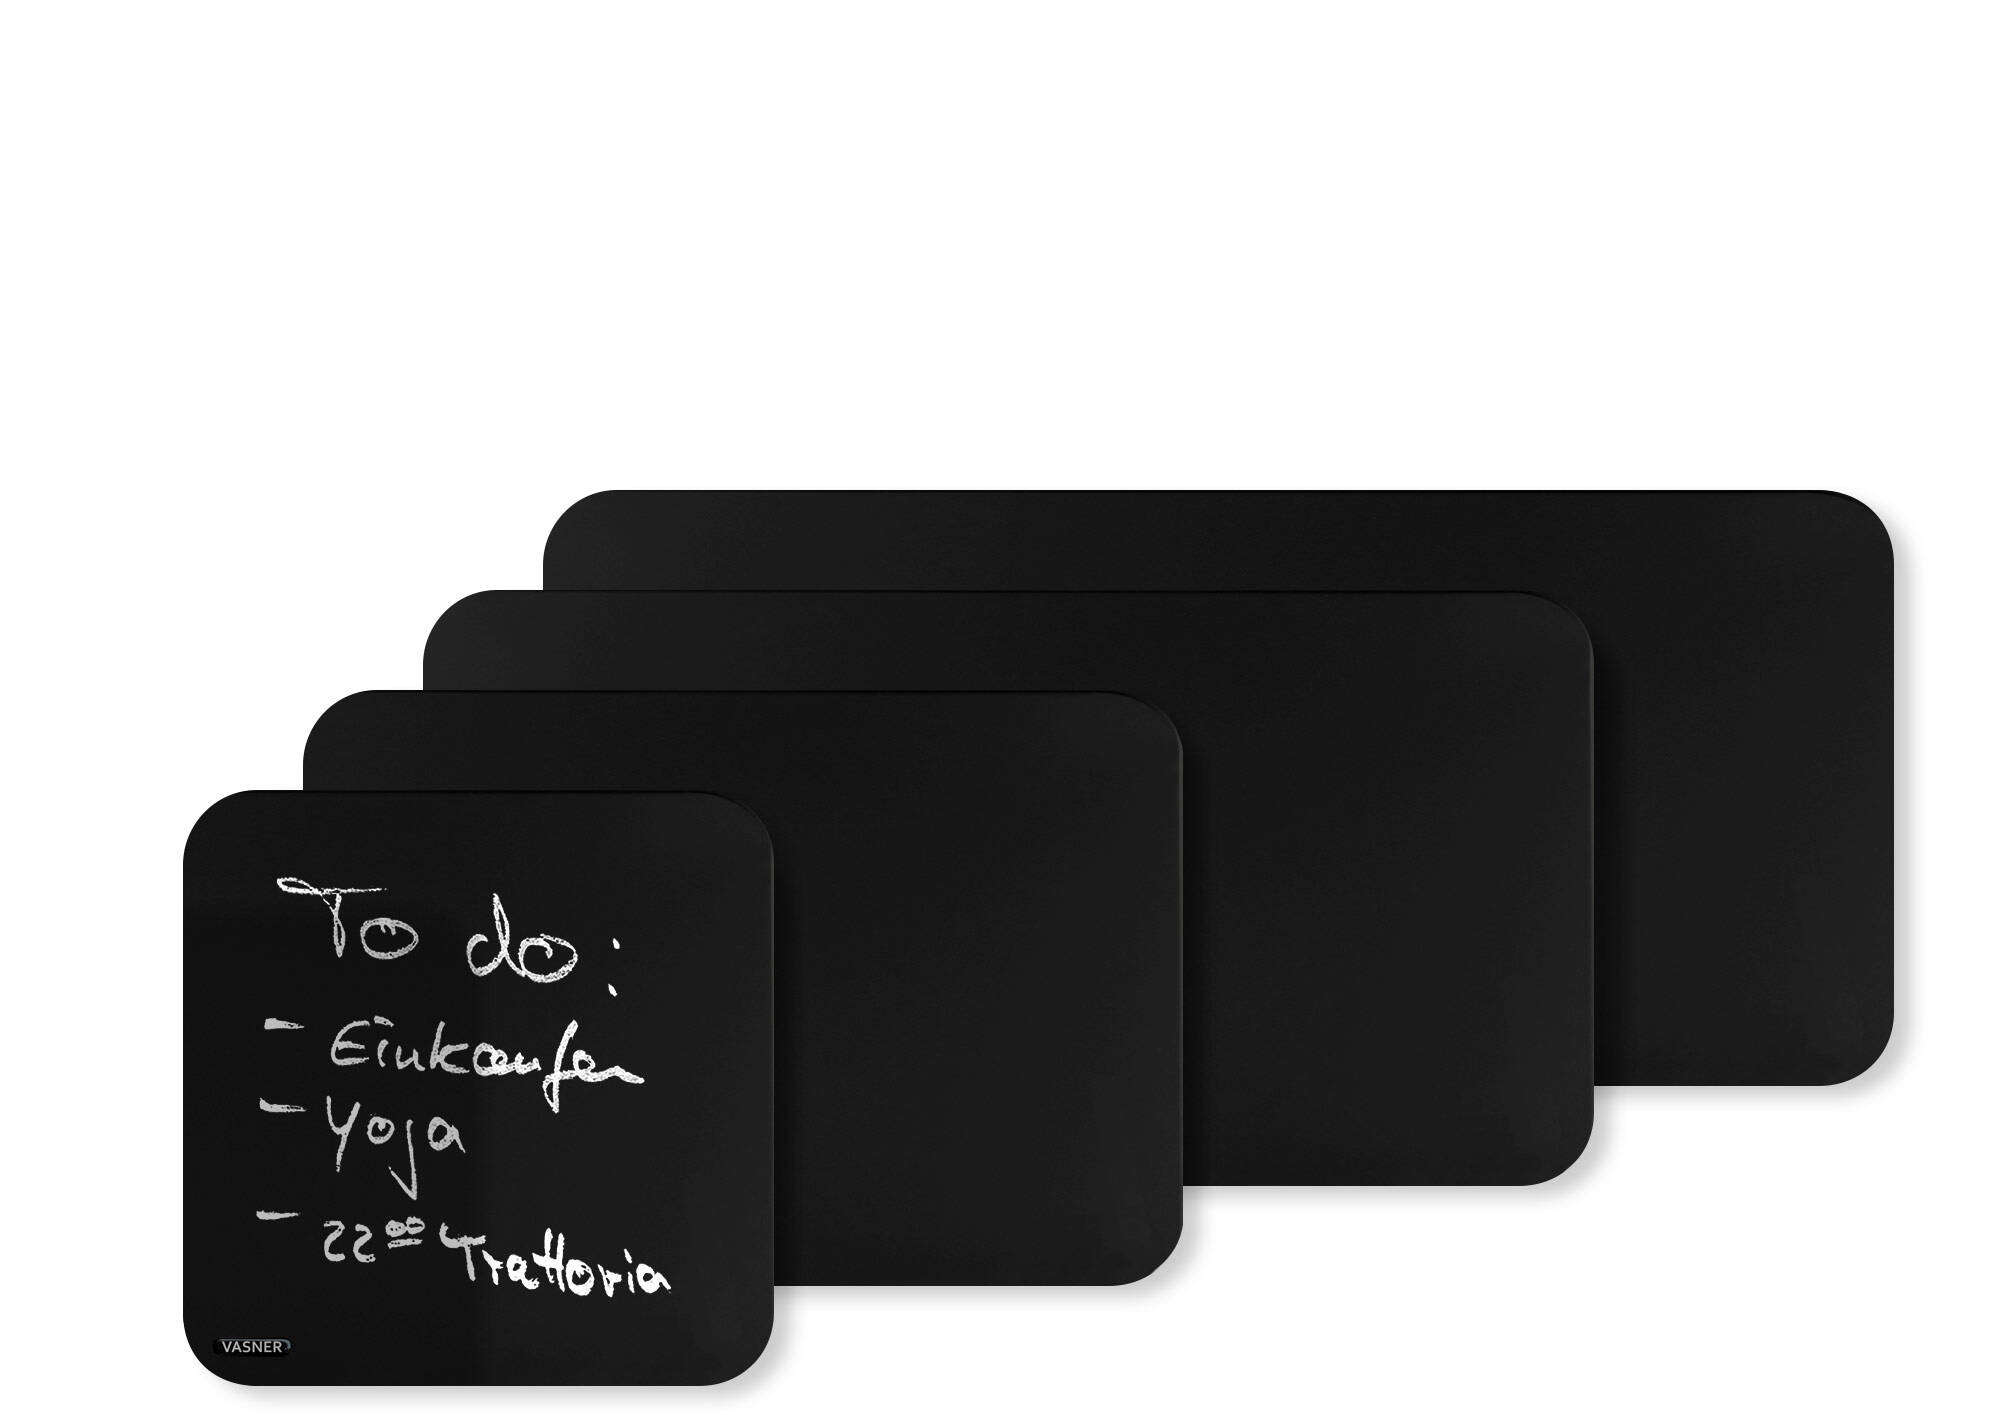 Infrared blackboard heater round corners models sizes